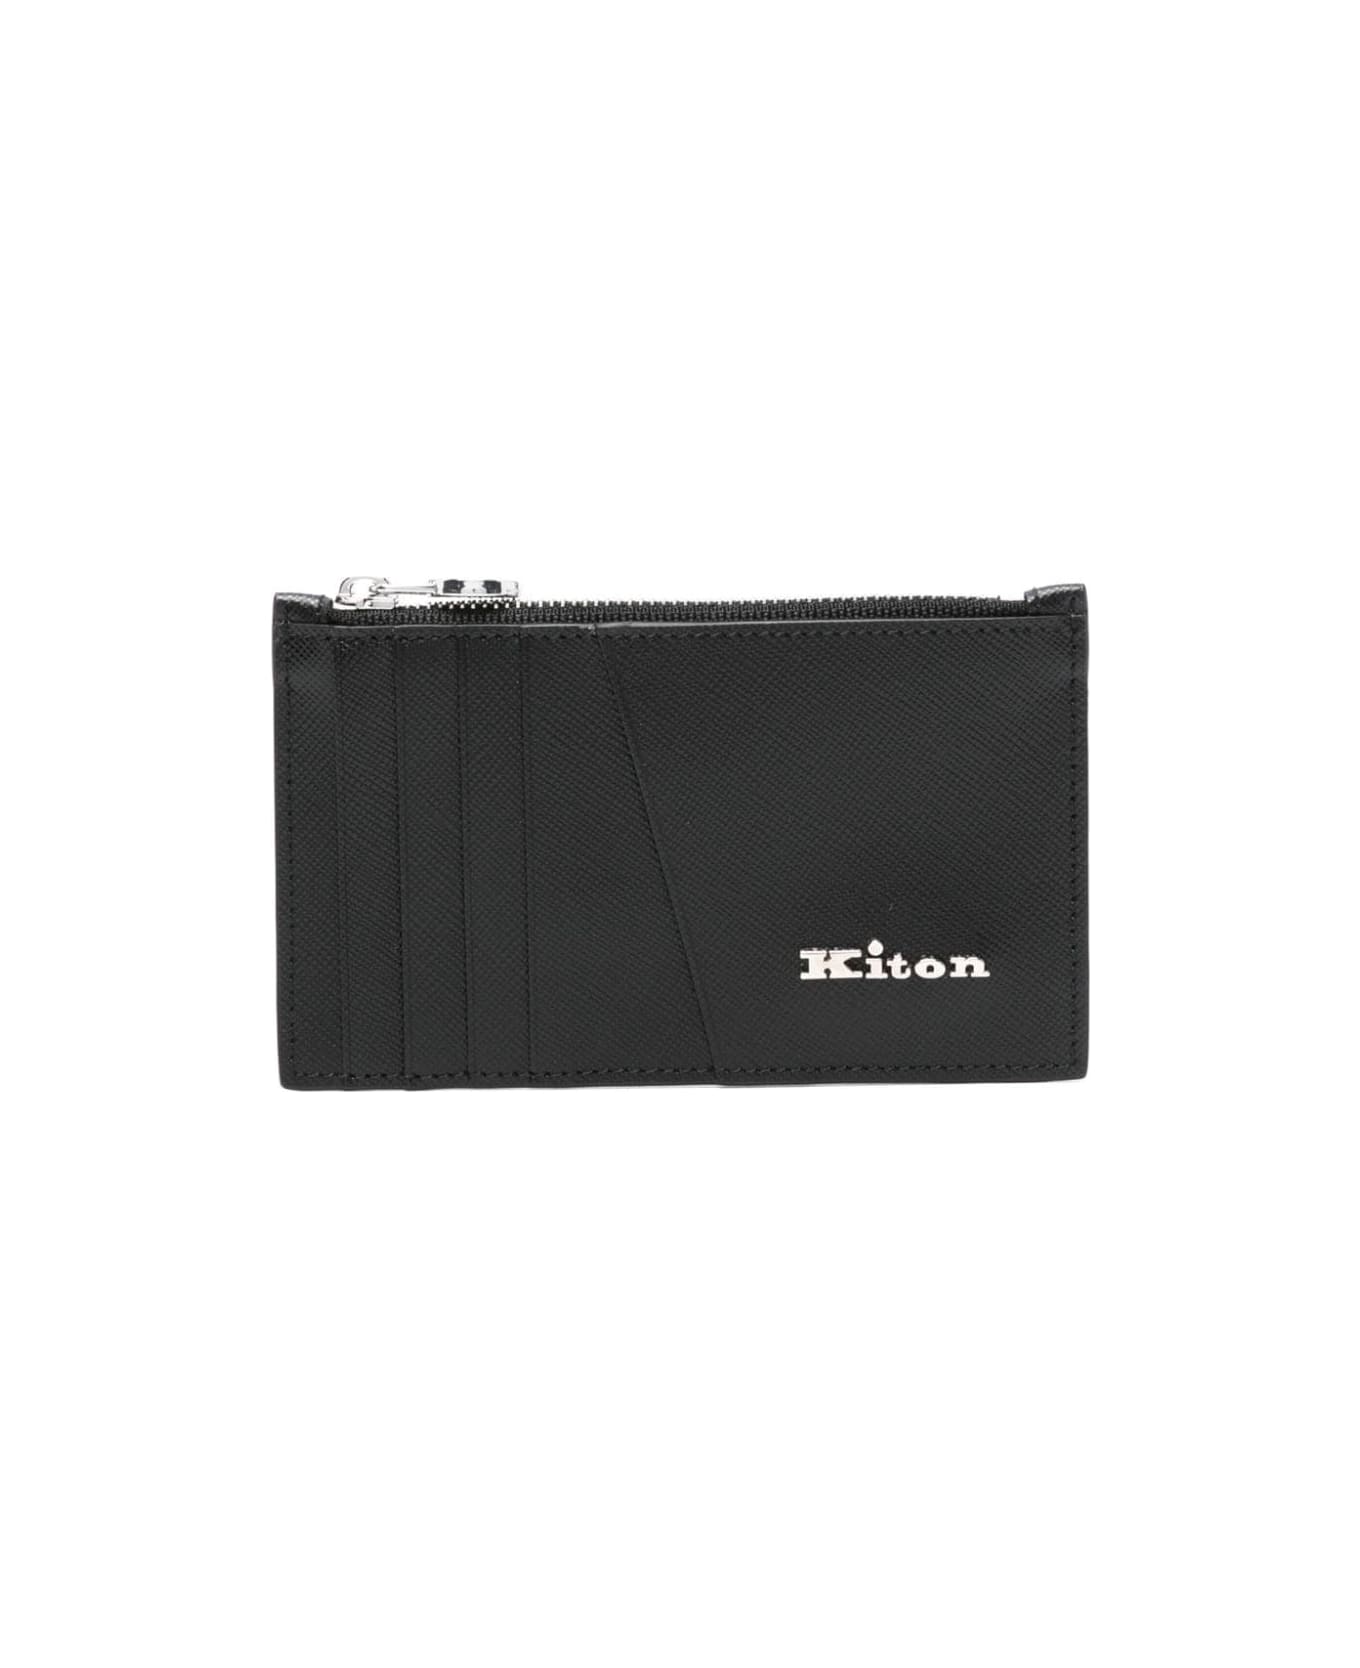 Kiton Black Leather Card Holder With Logo - Black 財布